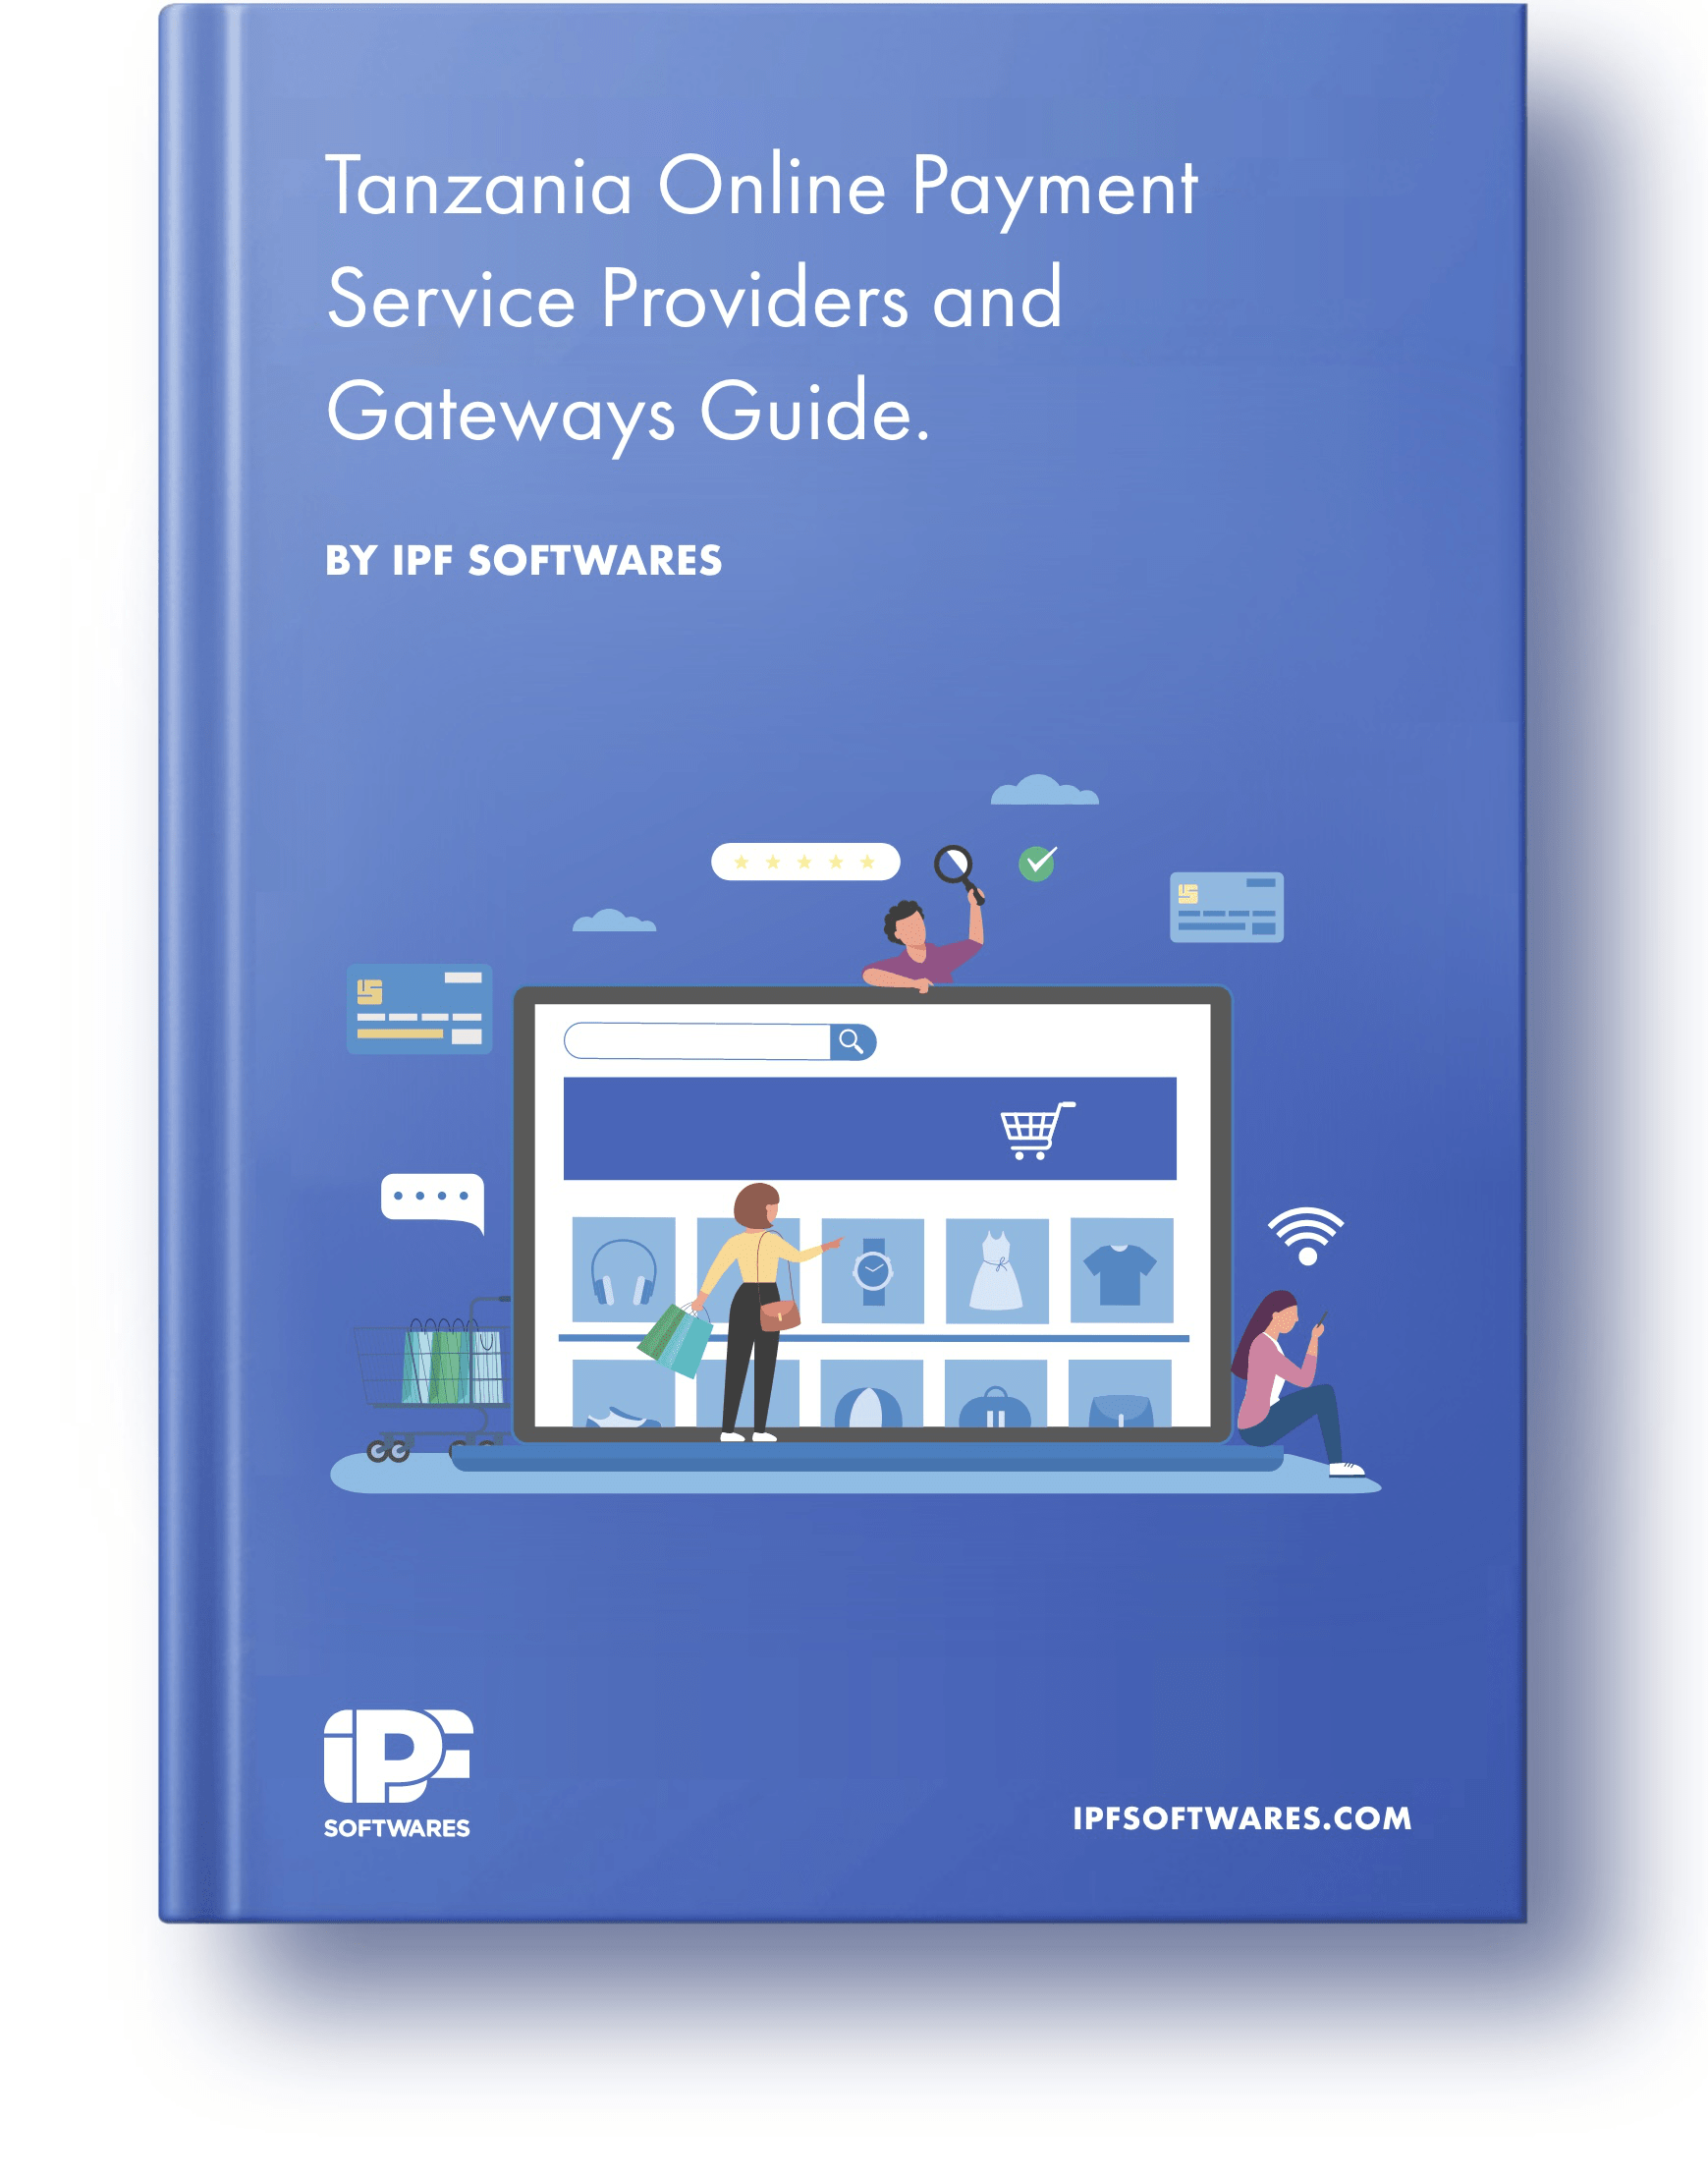 iPF Softwares Guidebook